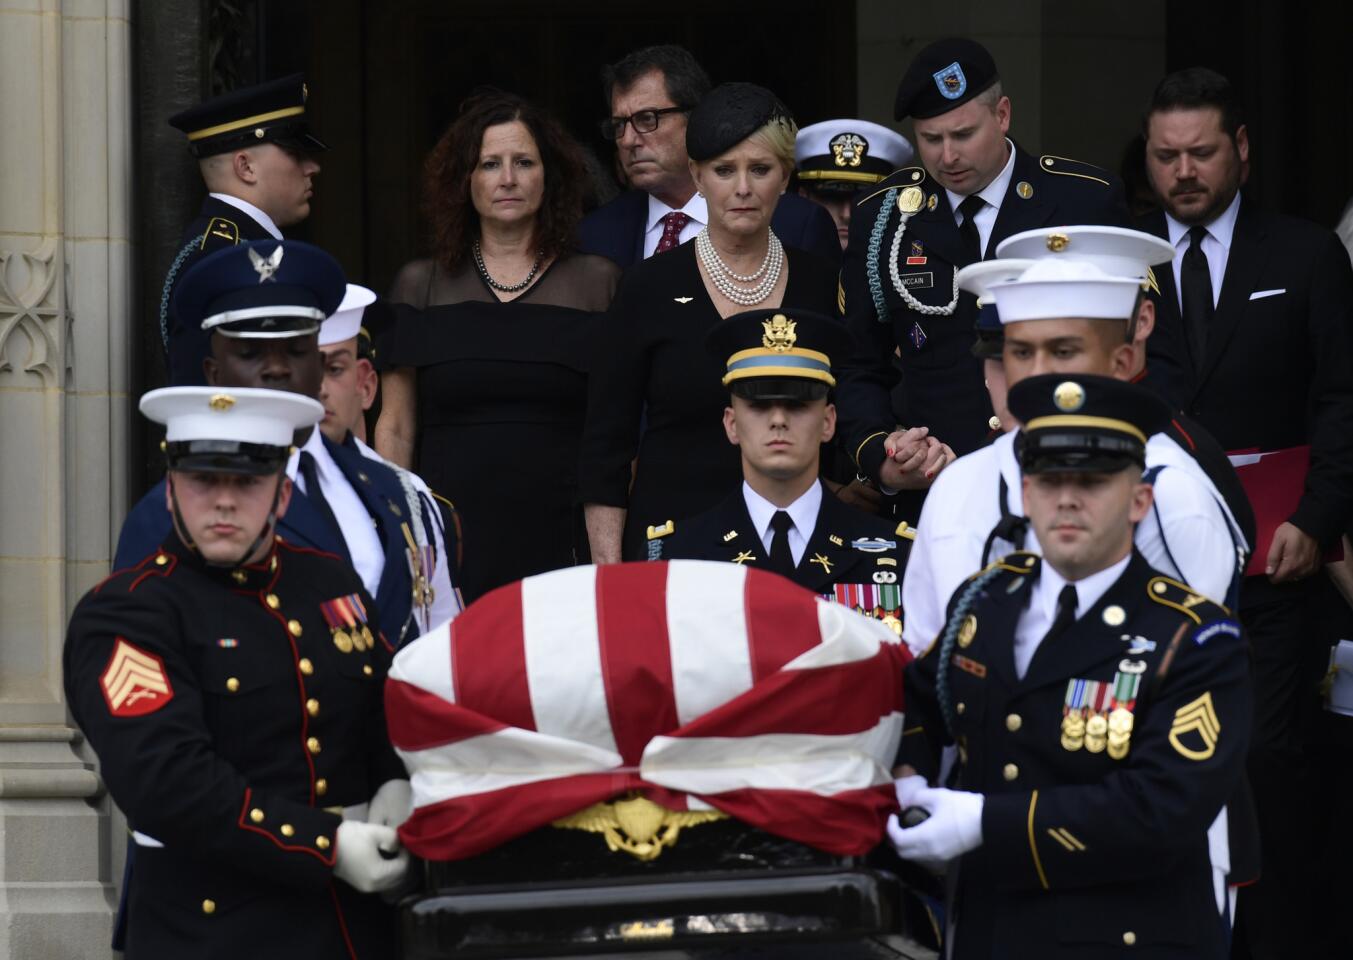 McCain funeral in Washington